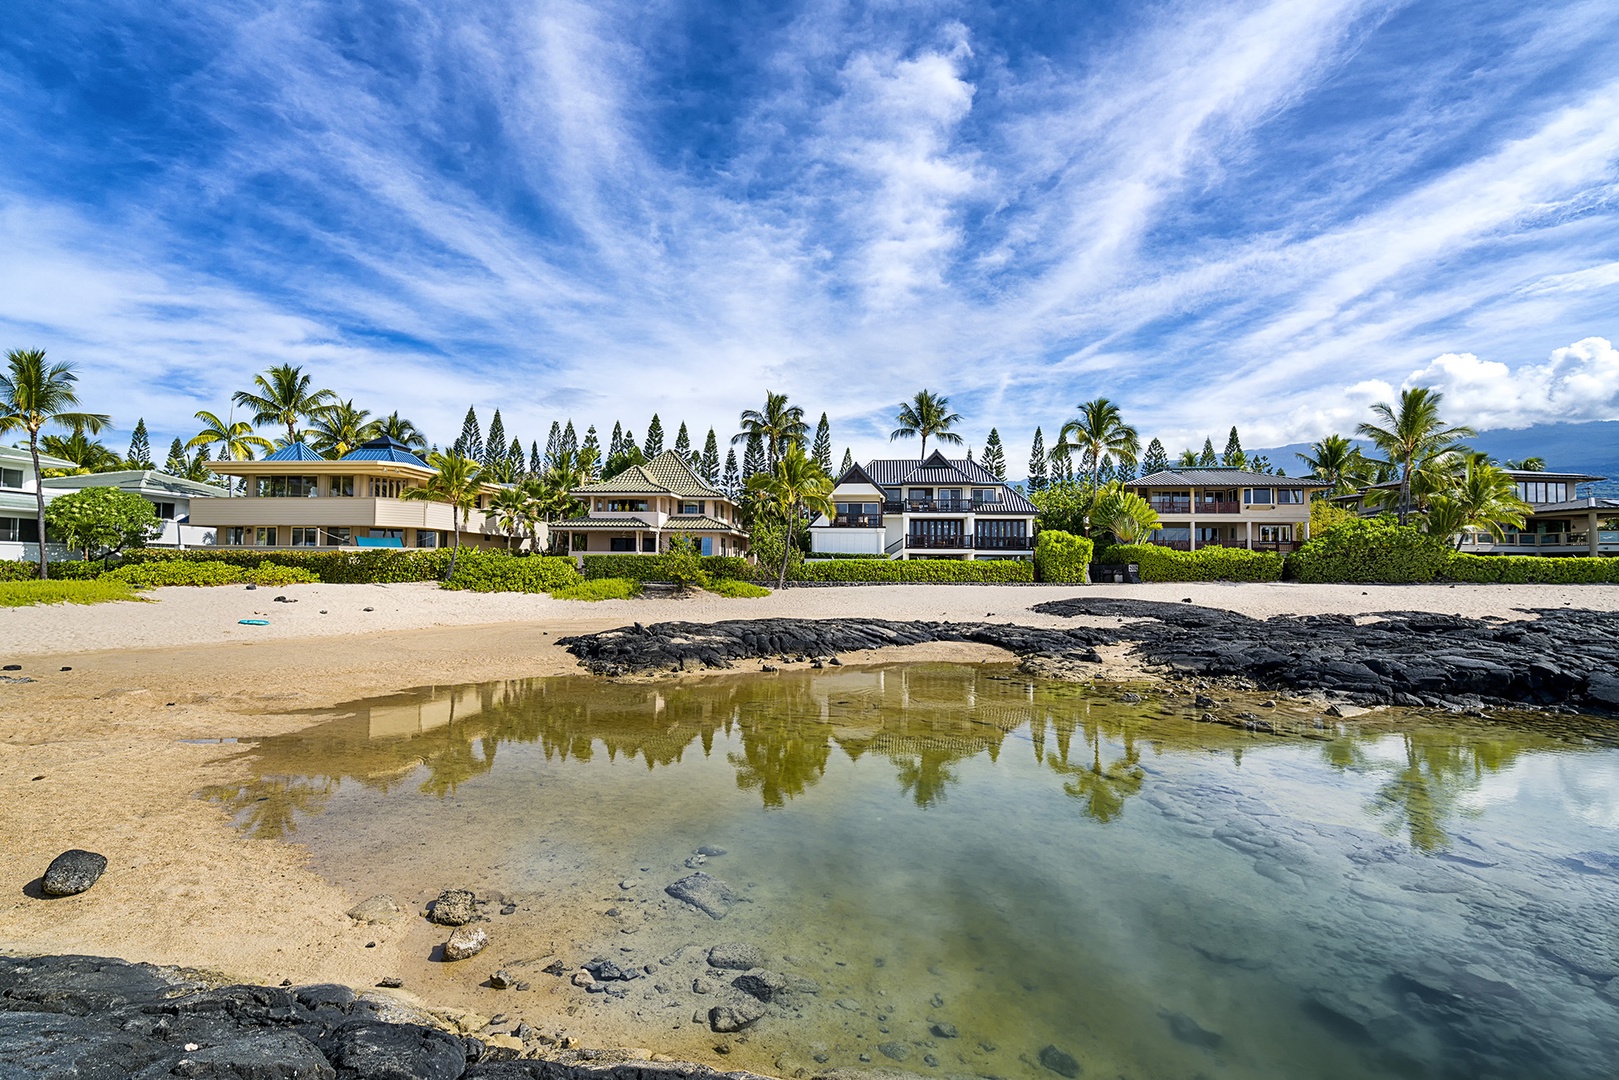 Kailua Kona Vacation Rentals, Mermaid Cove - Keiki ponds translating to kids beach